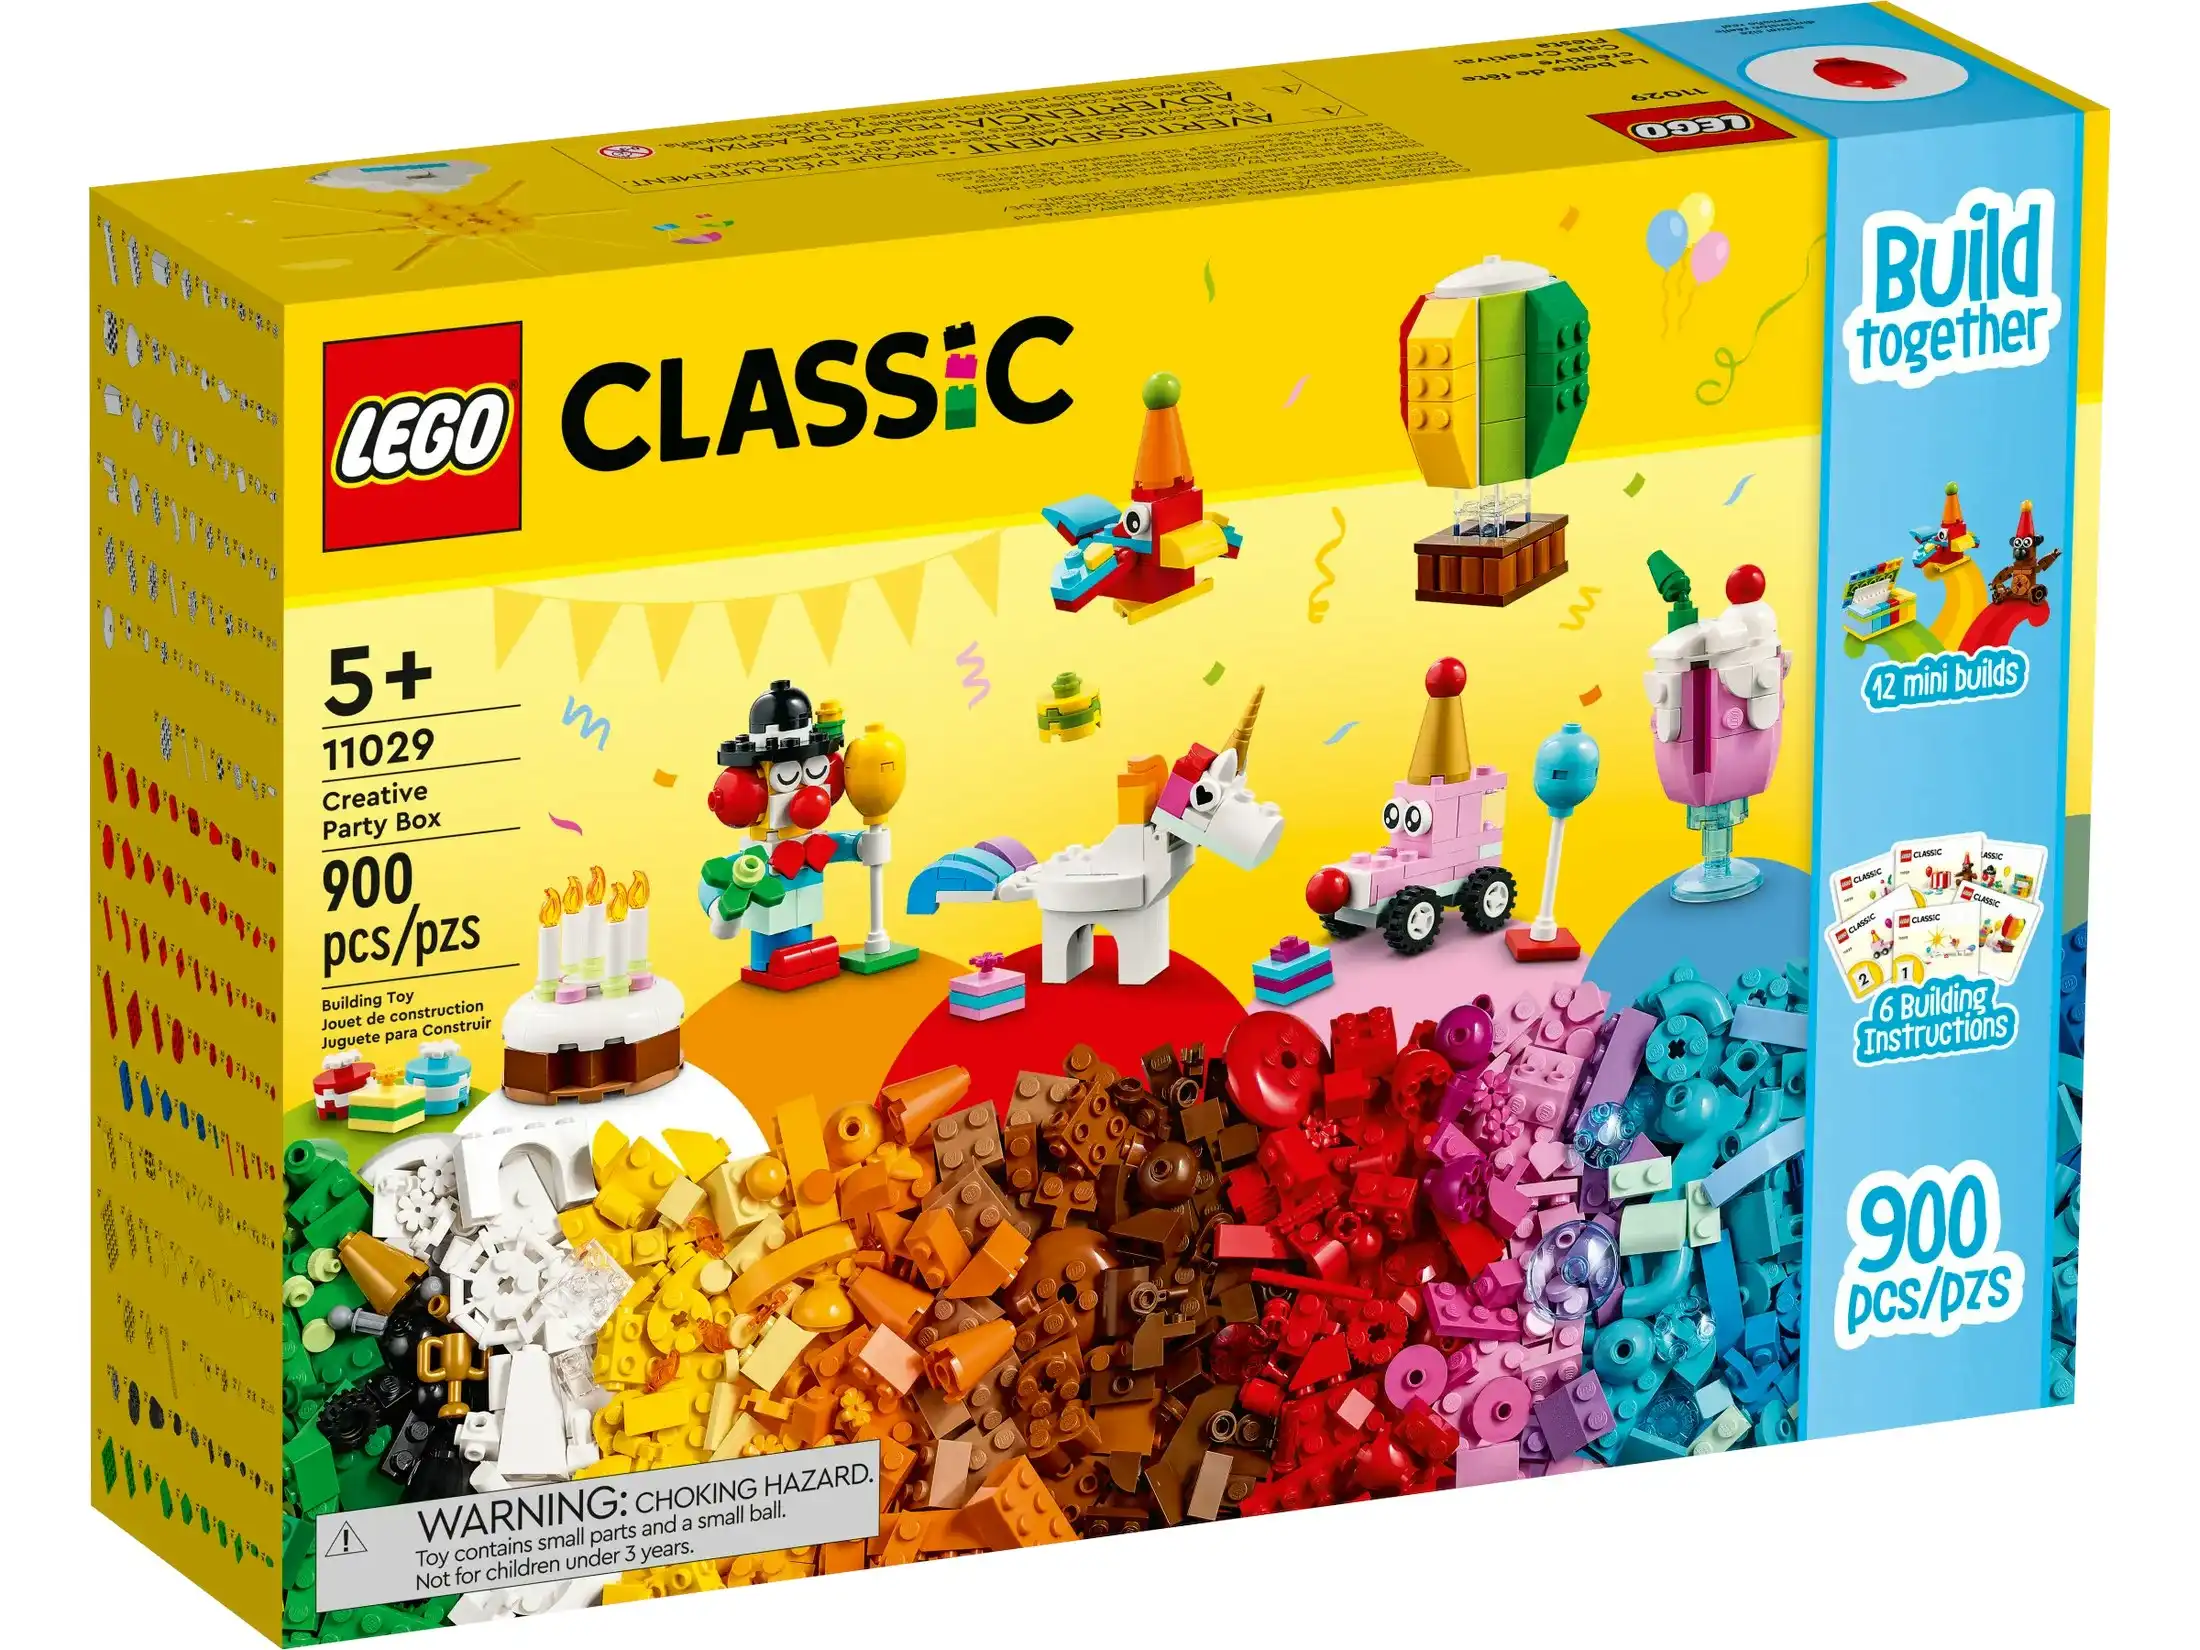 LEGO 11029 Creative Party Box - Classic